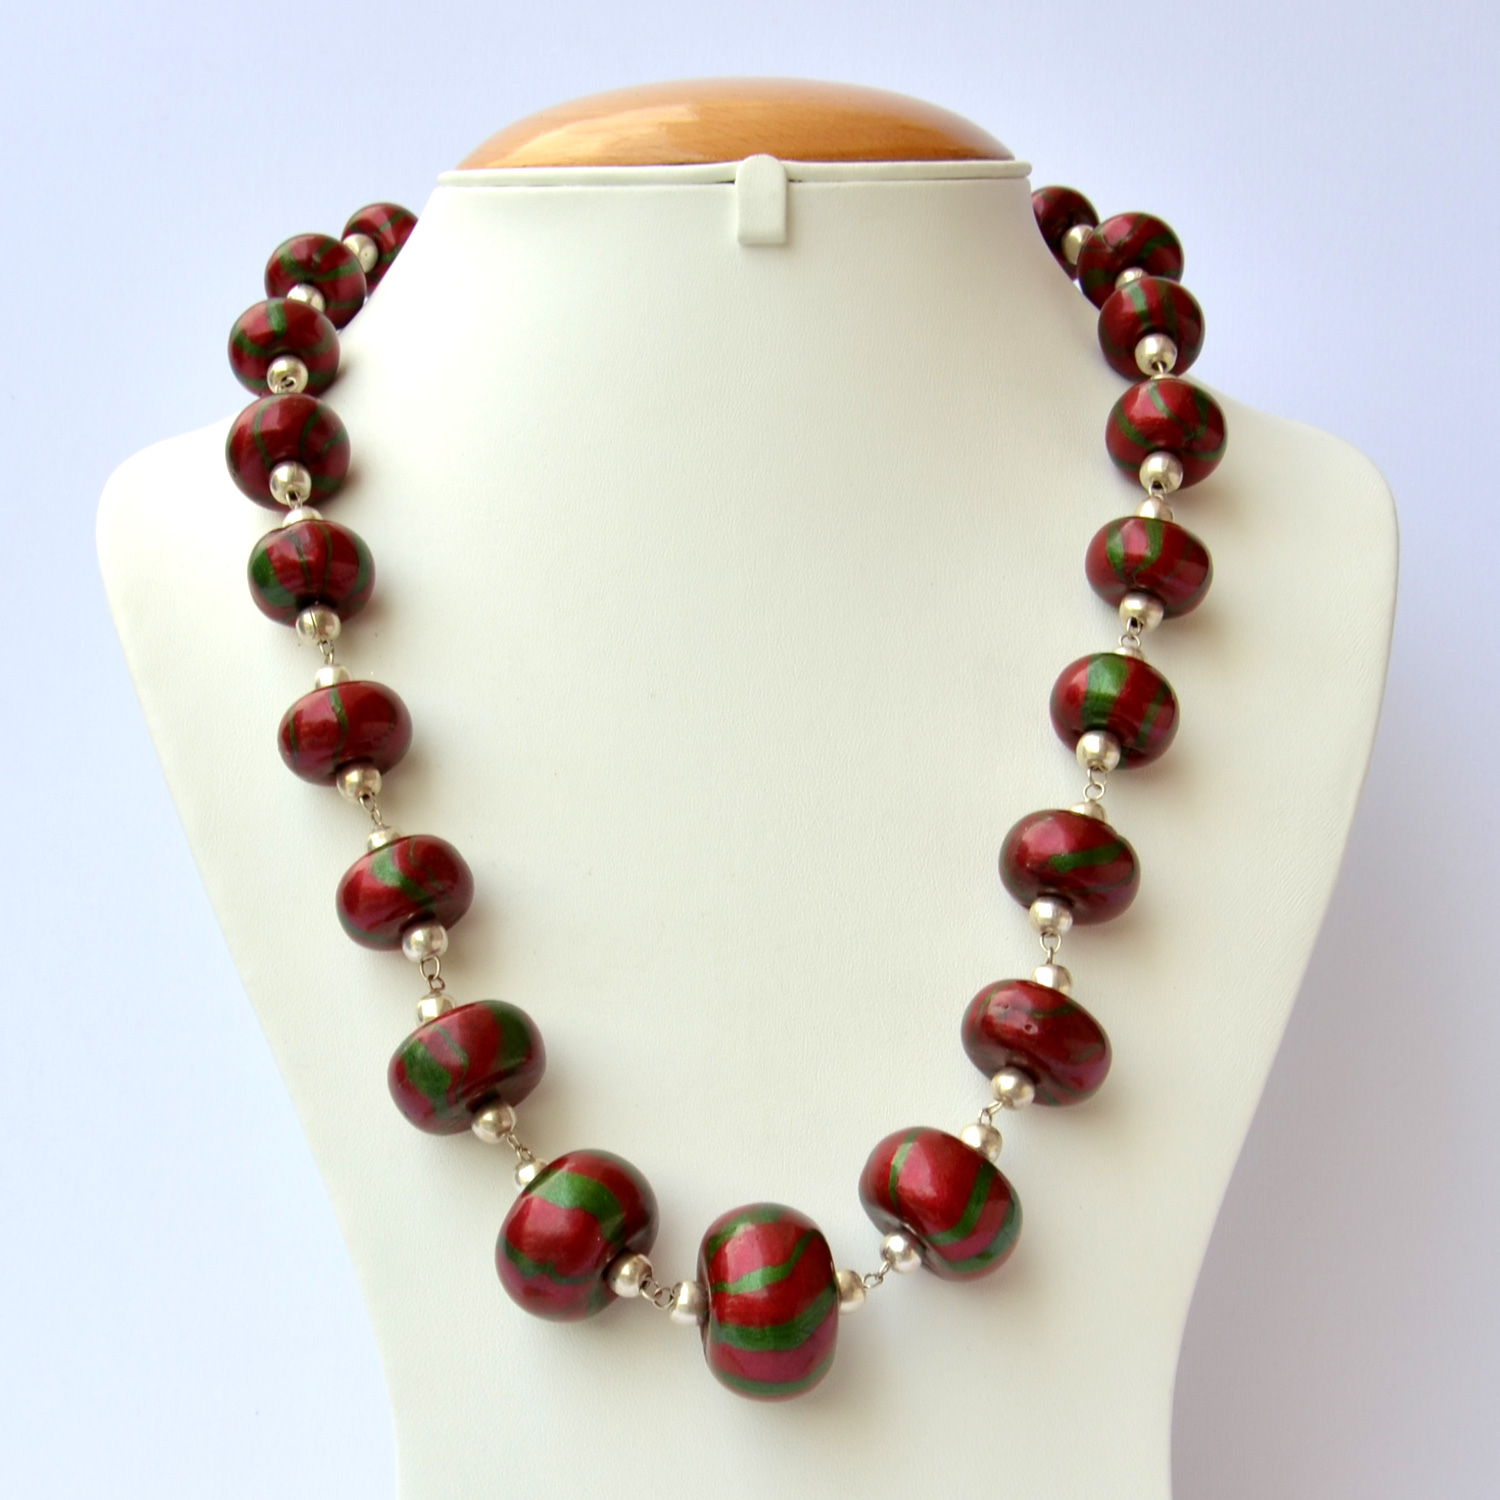 Handmade Necklace with Maroon Beads having Green Stripes | Maruti Beads